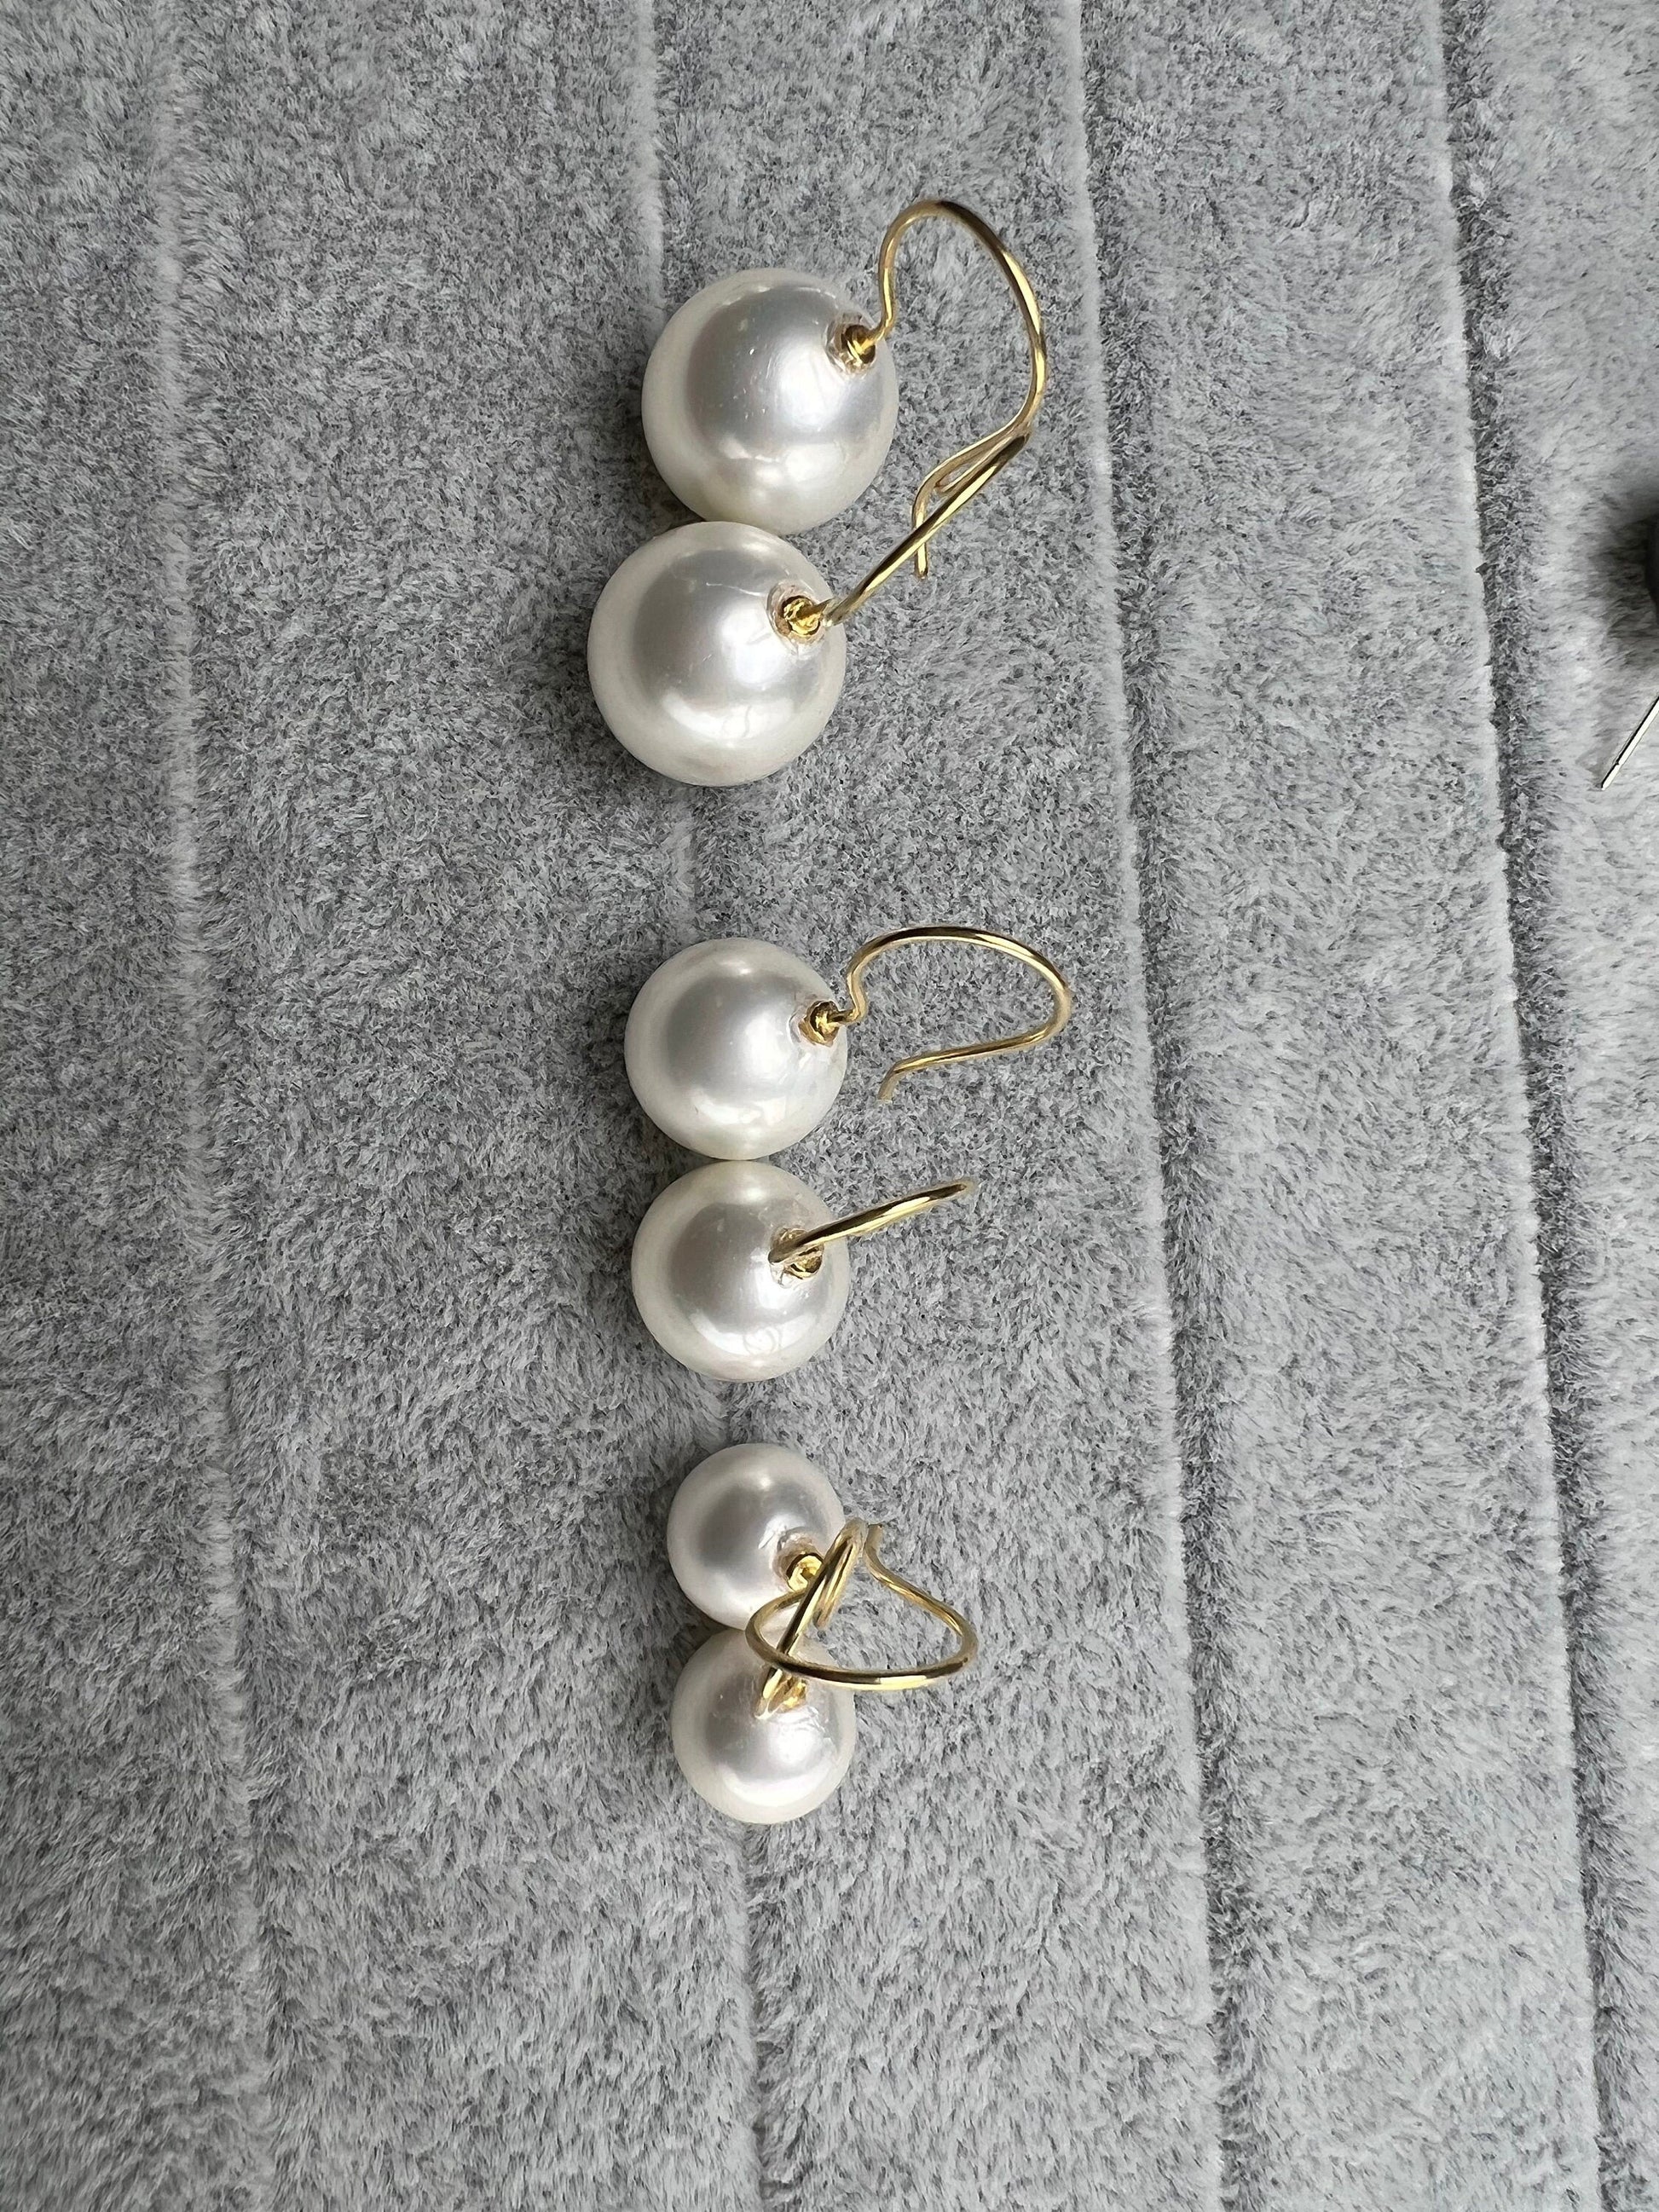 Half drilled White South Sea Shell Pearl earring 10,12,14mm Large High Luster Pearl 22k gold vermeil glue on hook Earrings,Elegant Bridal